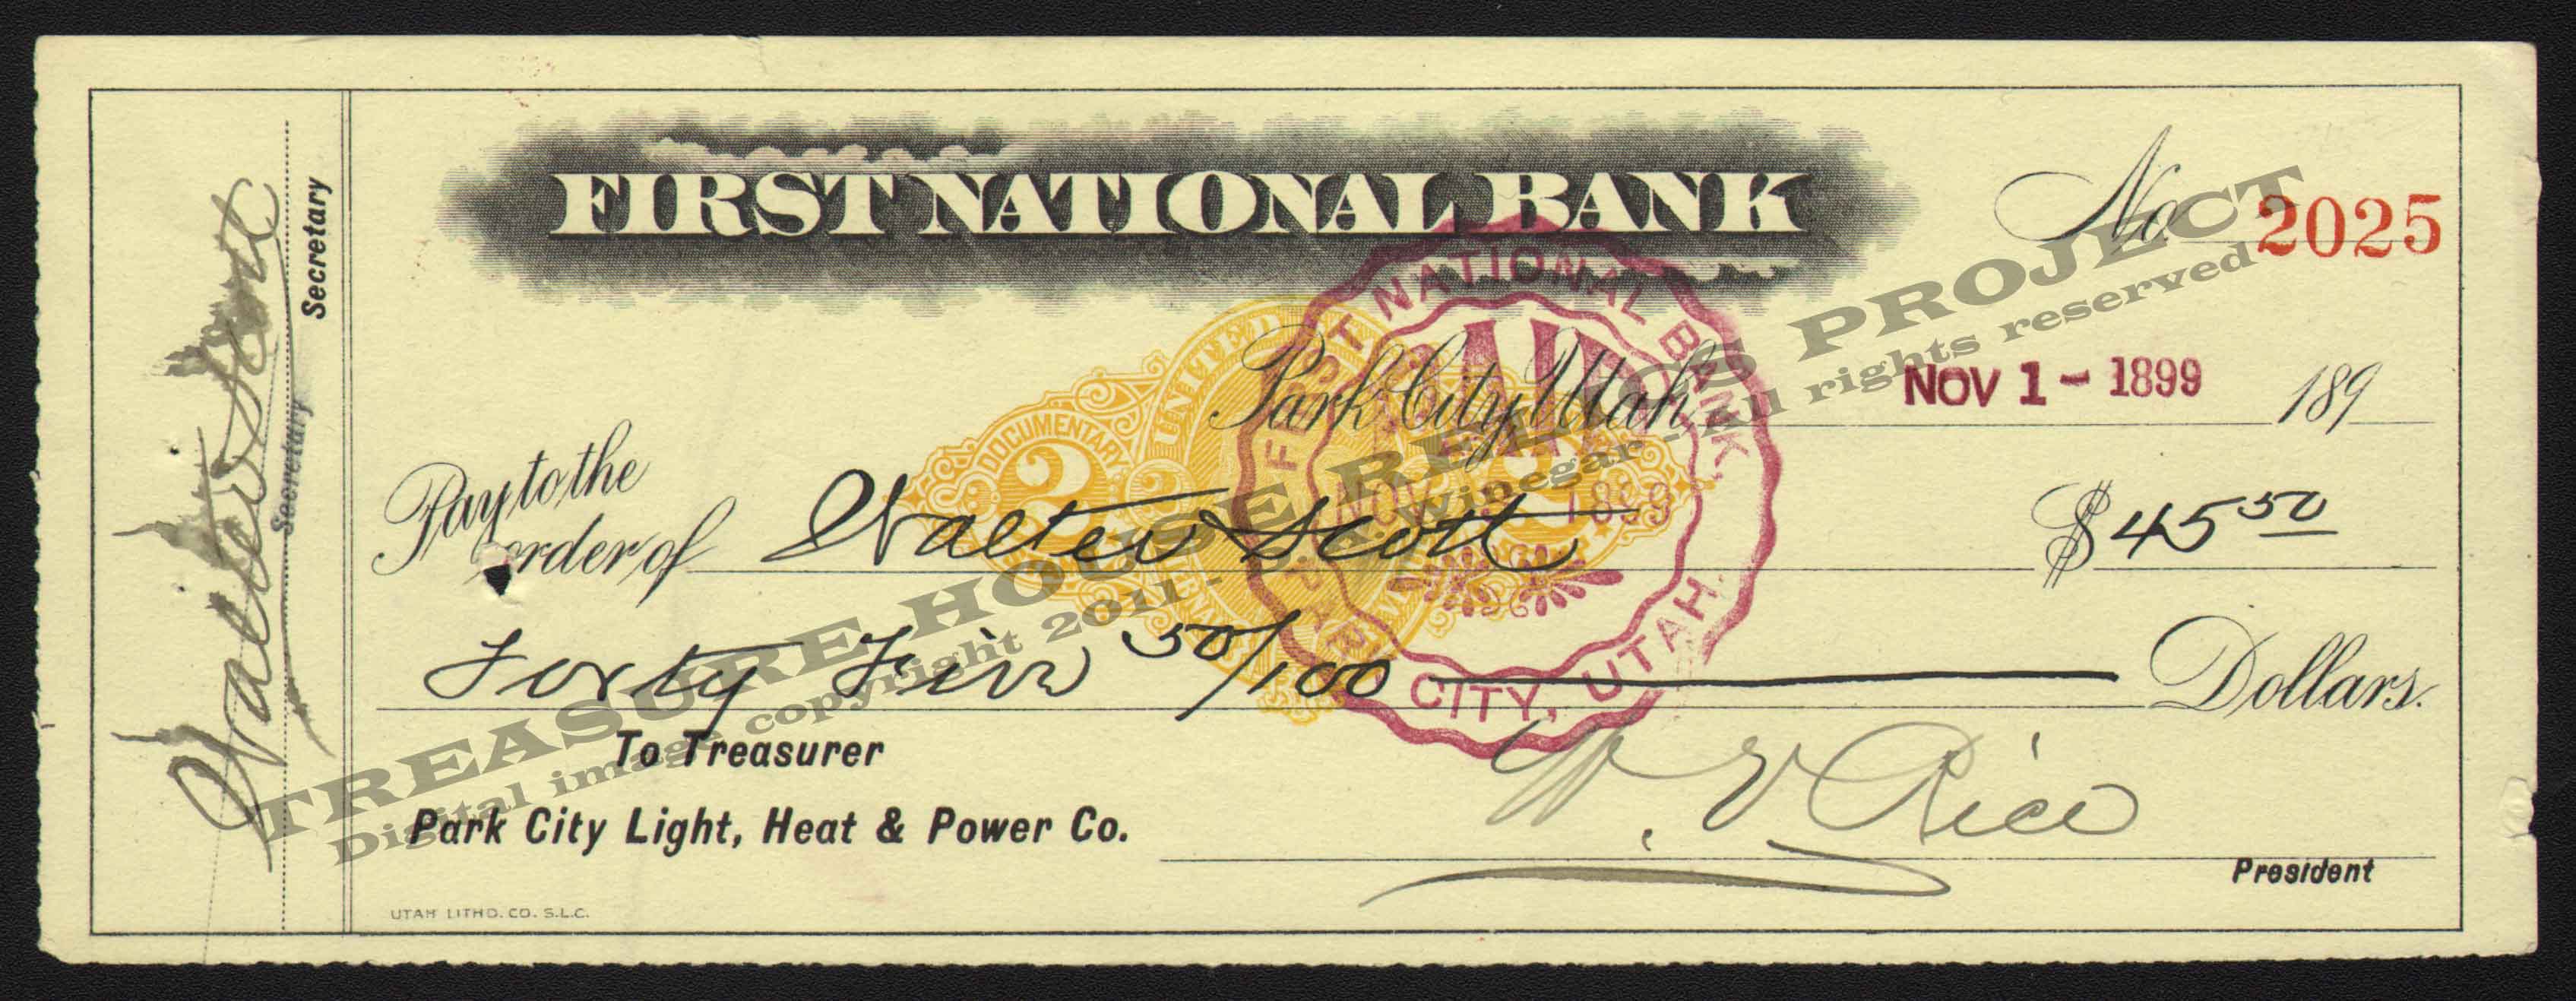 CHECK_-_FIRST_NATIONAL_BANK_2025_1899_400_EMBOSS.jpg